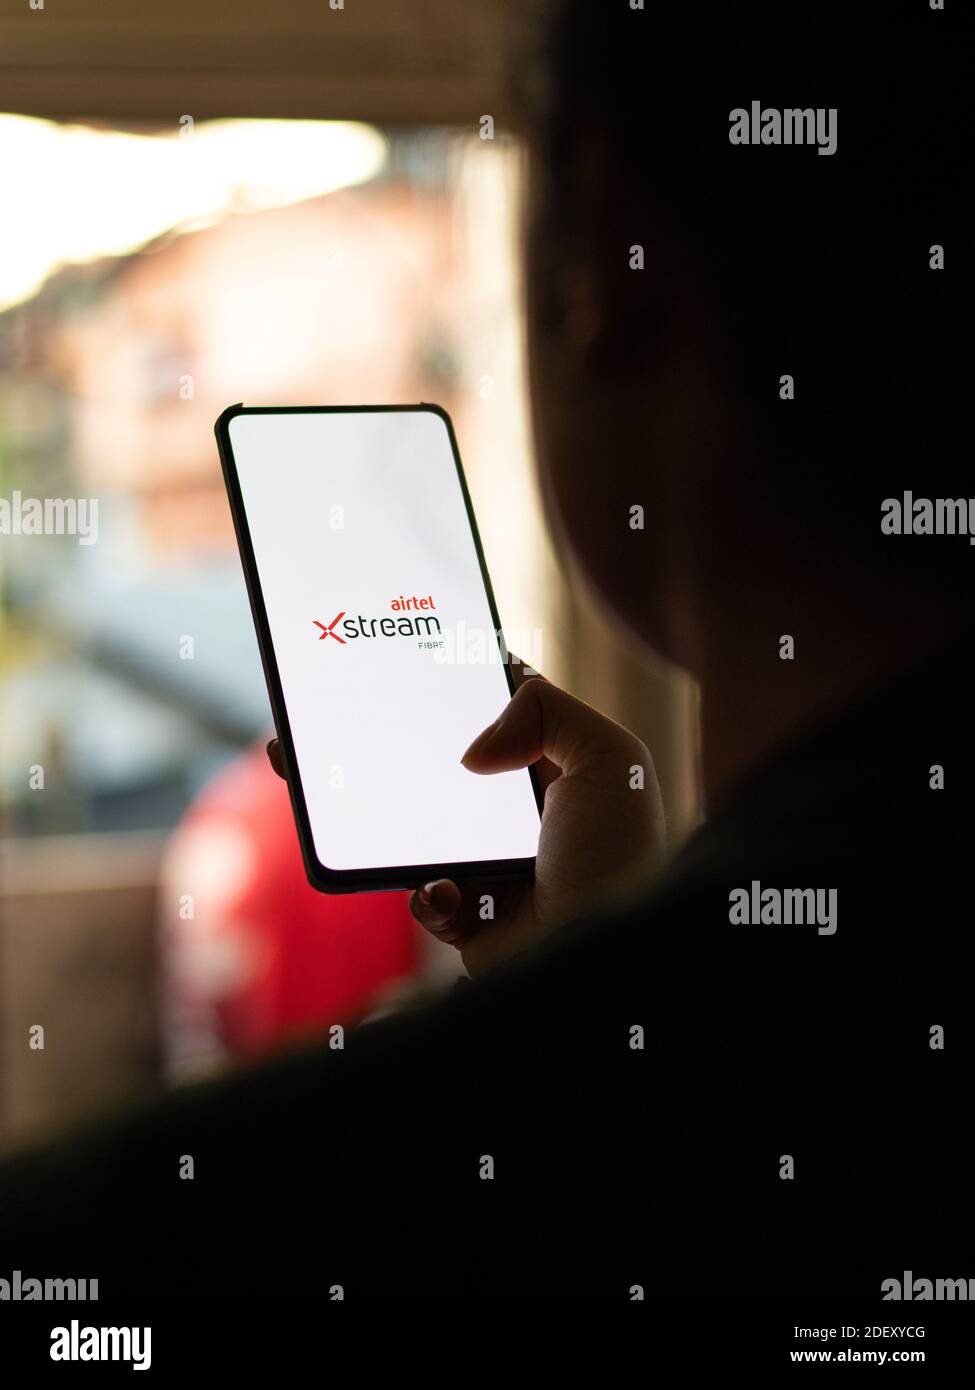 Assam, india - November 29, 2020 : Airtel xstream logo on phone screen stock image. Stock Photo